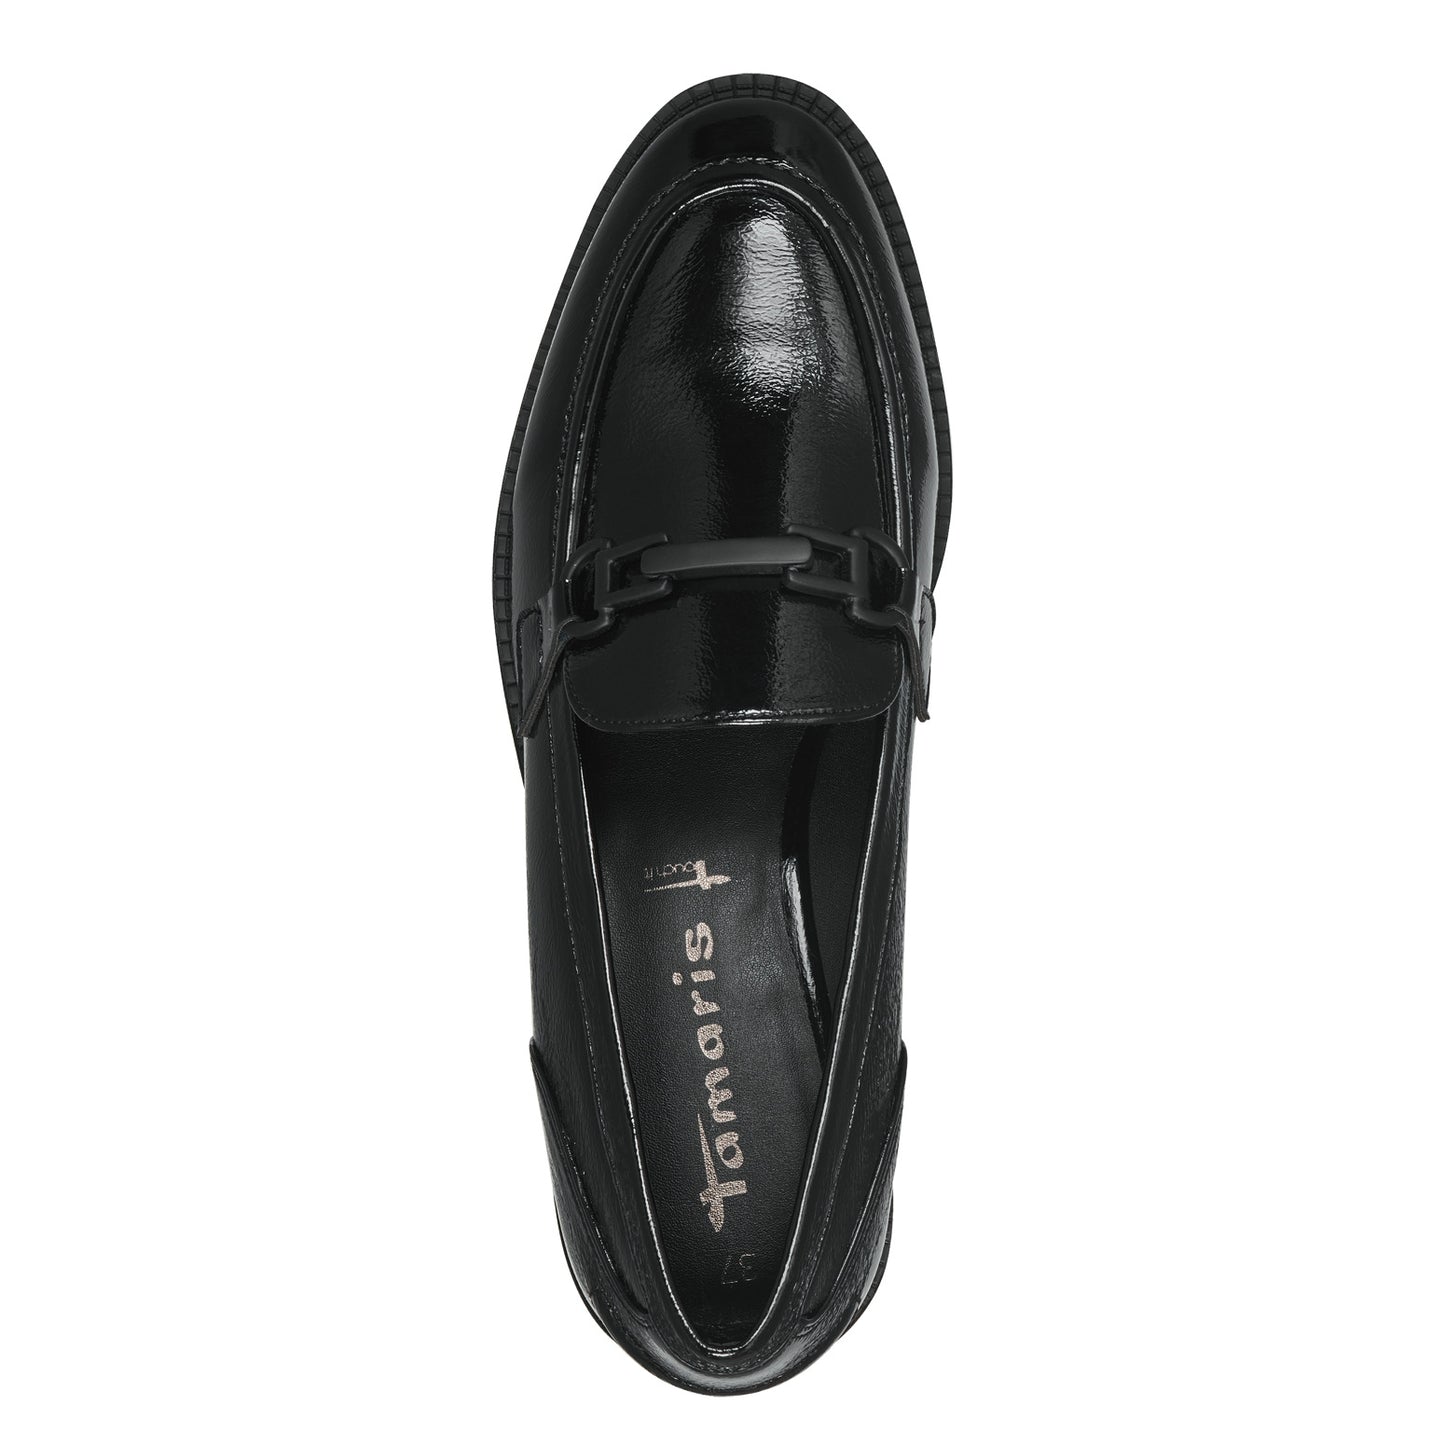 Tamaris 1-24301-41 018 Black Patent Casual Shoes